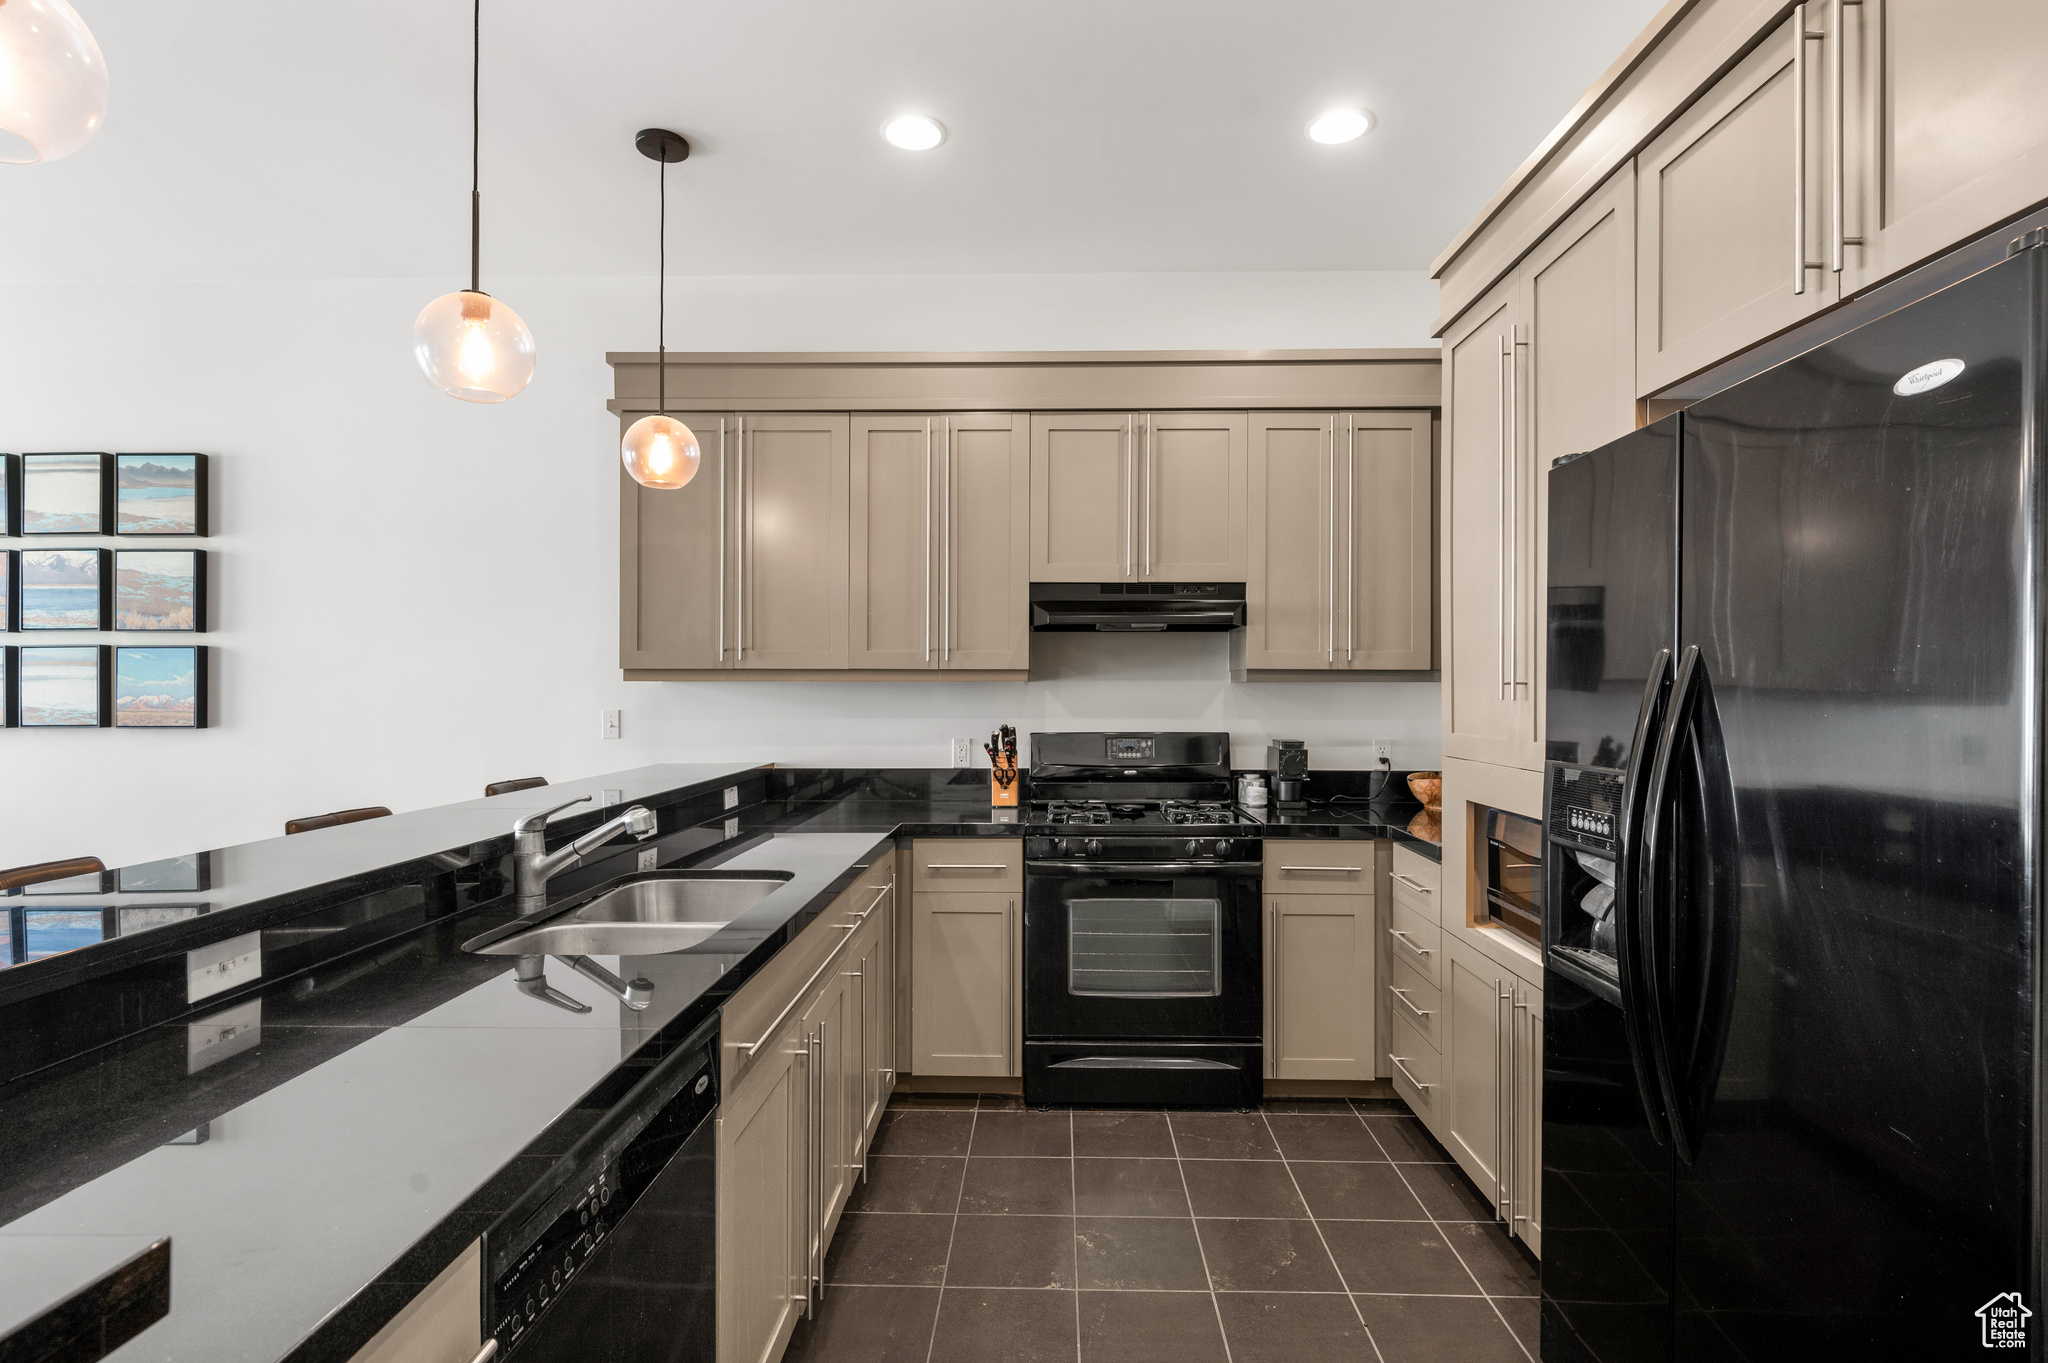 Kitchen featuring sink, pendant lighting, dark tile floors, and black appliances